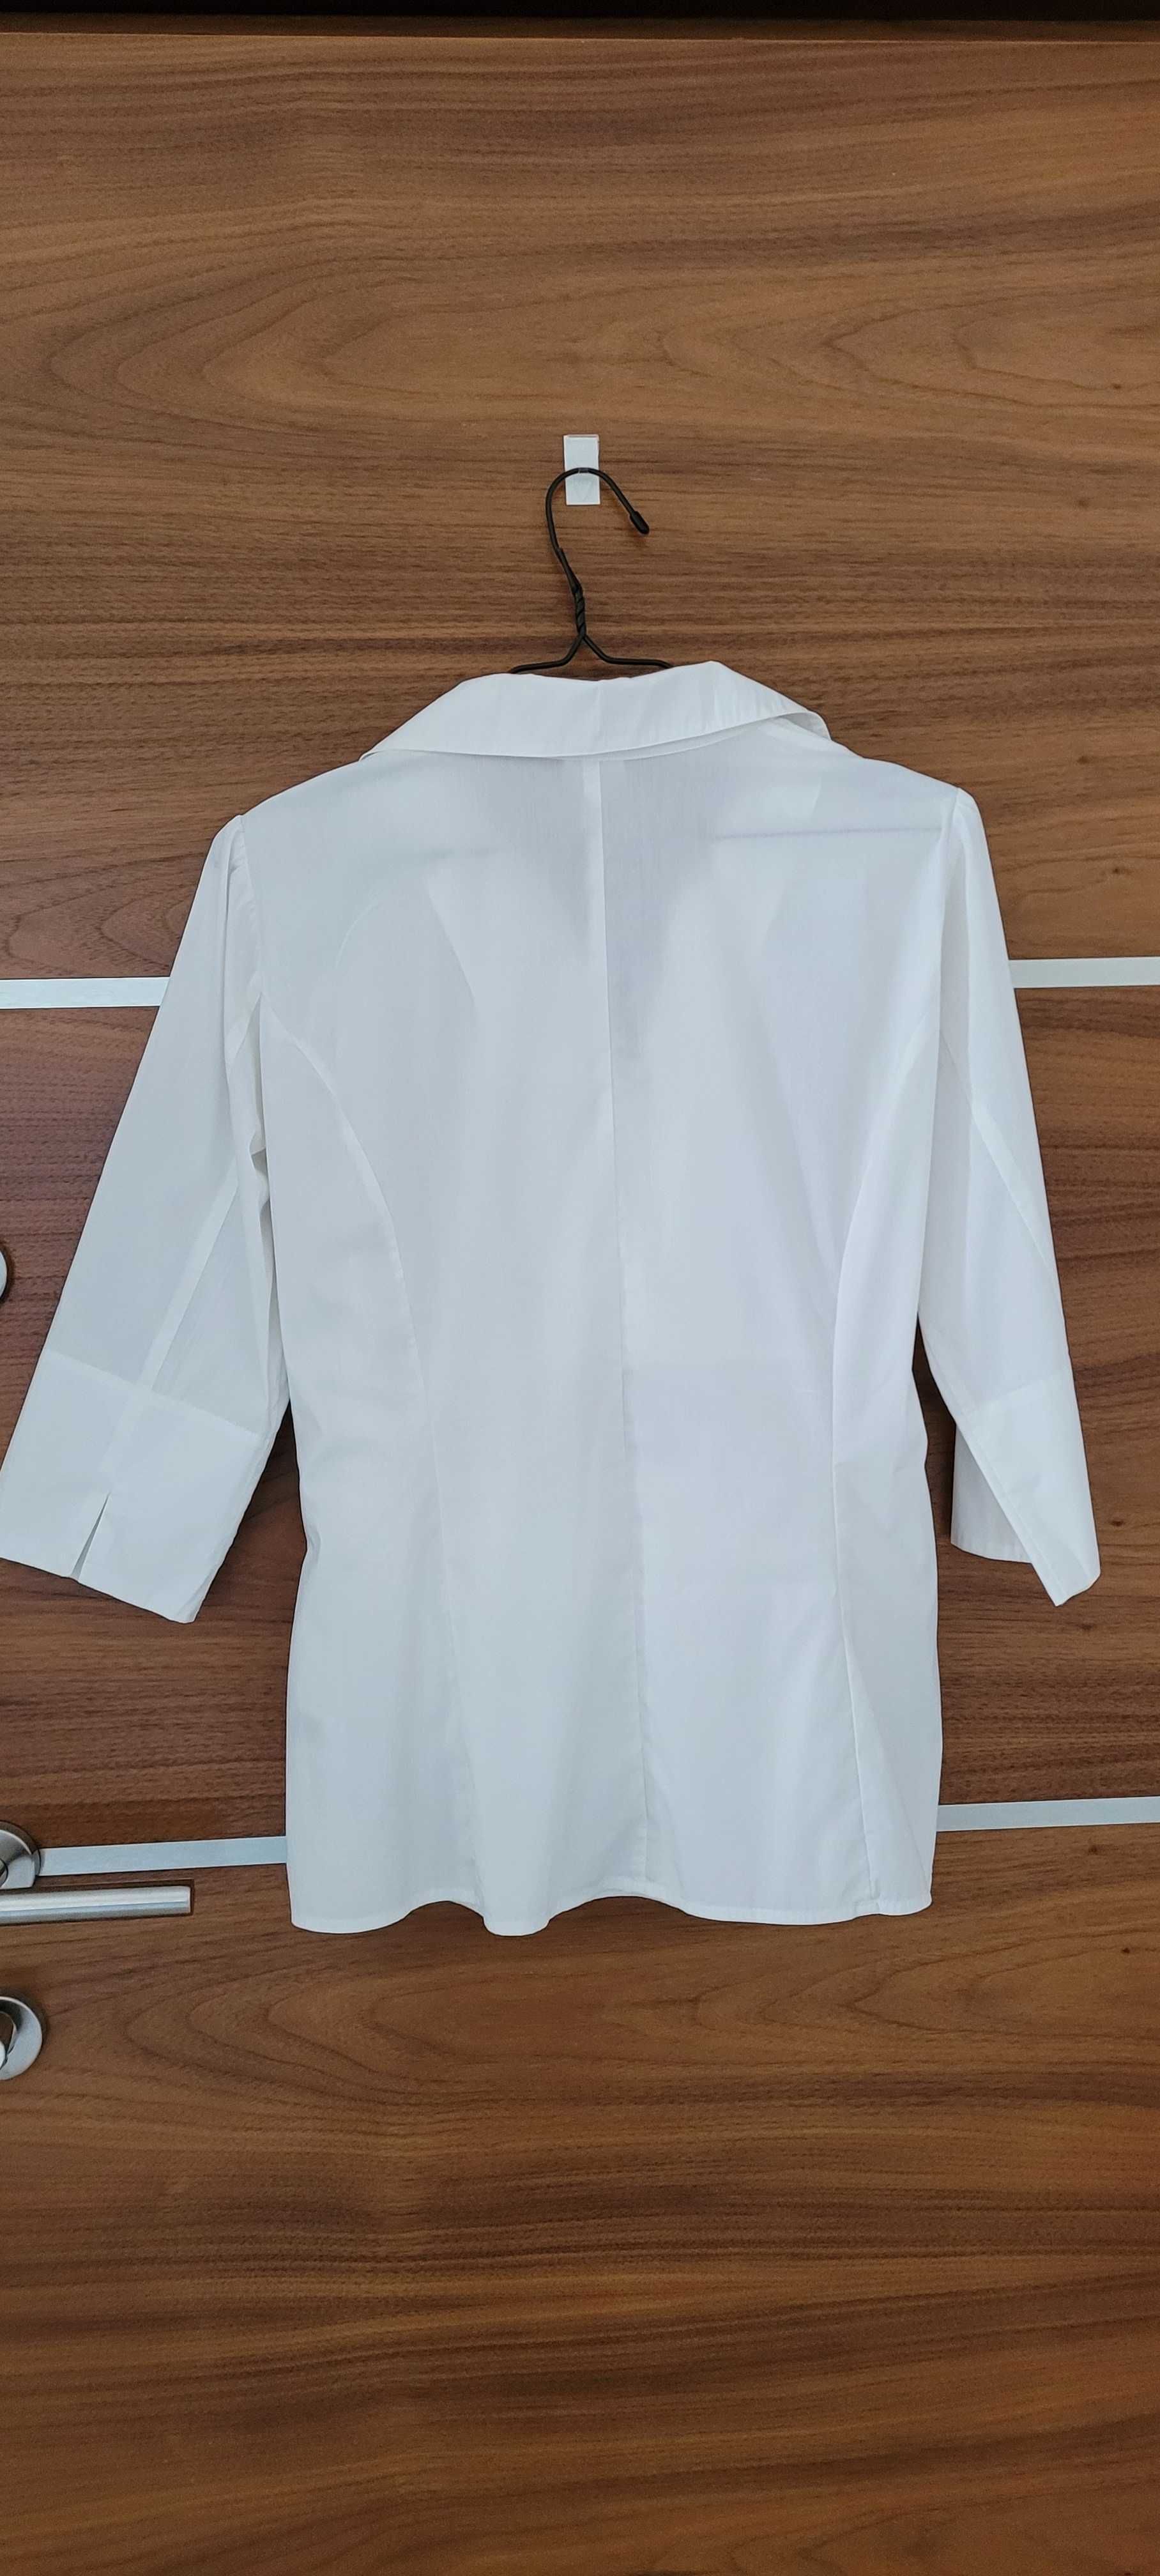 Elegancka bluzka wizytowa biała Monnari r.40